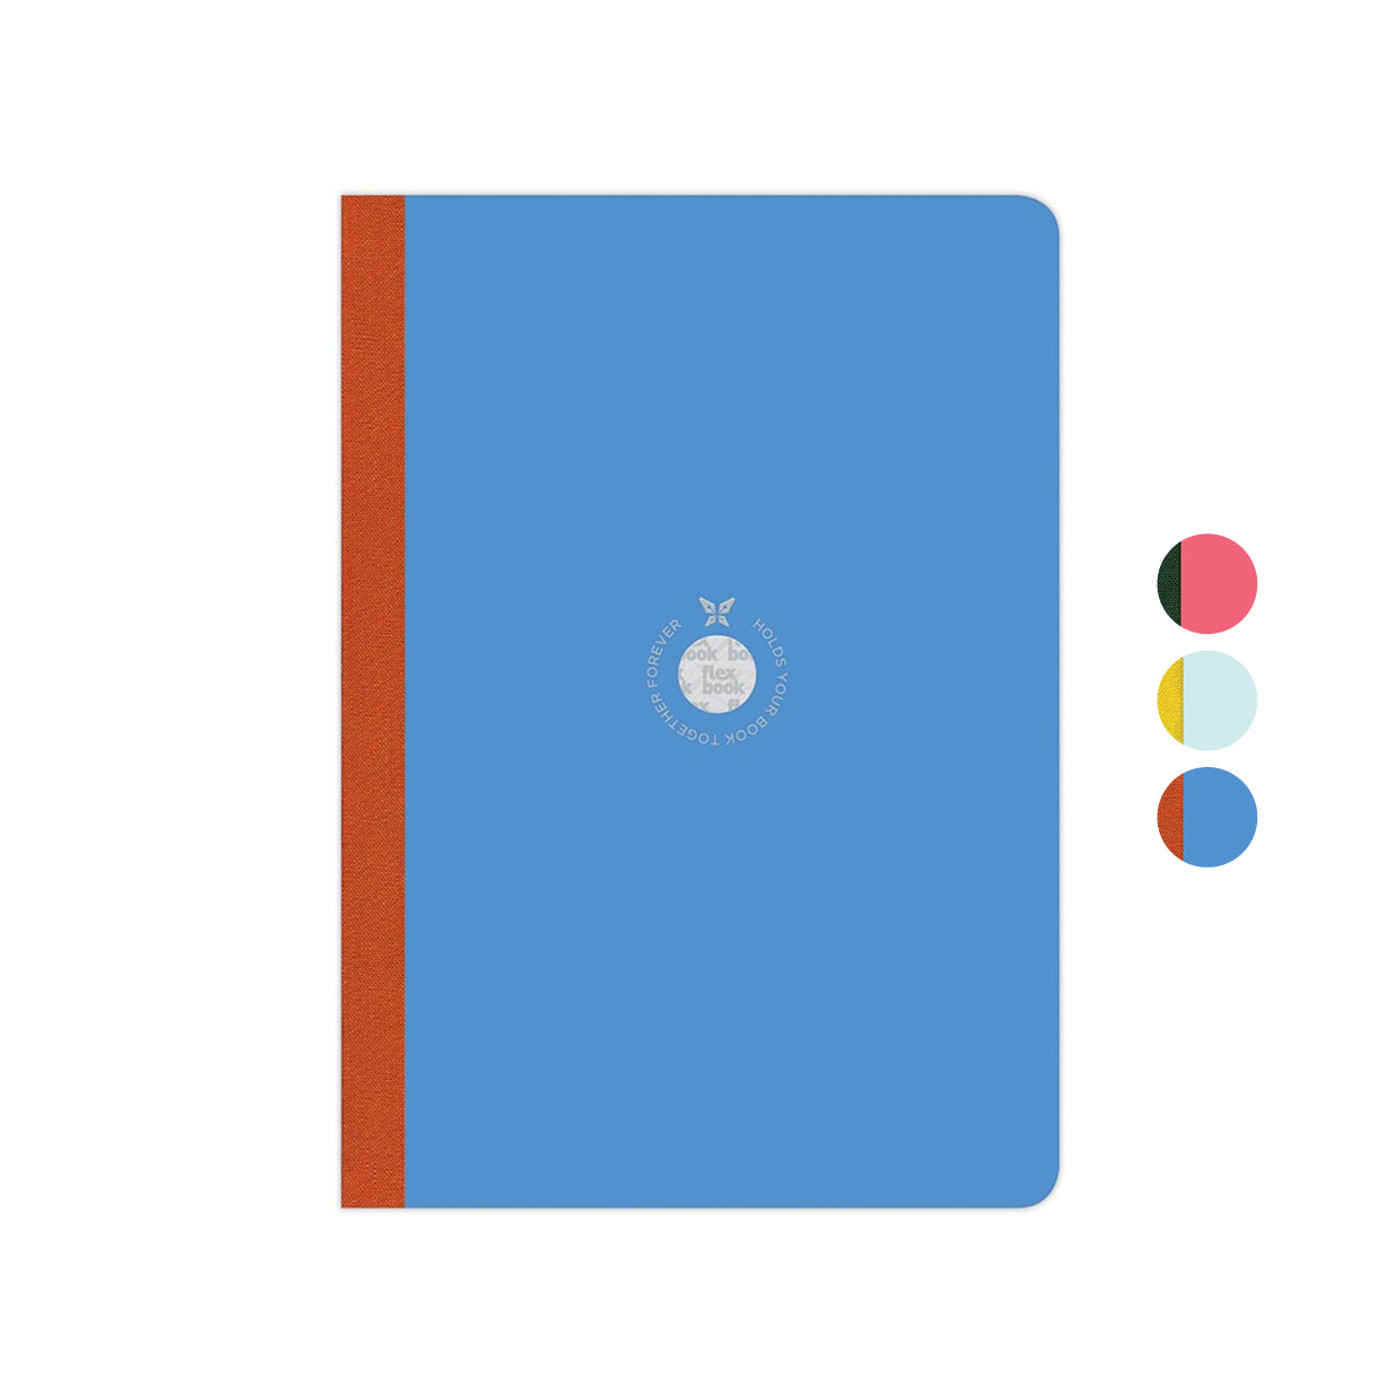 Flexbook - Smart notebook - B5 - LINED